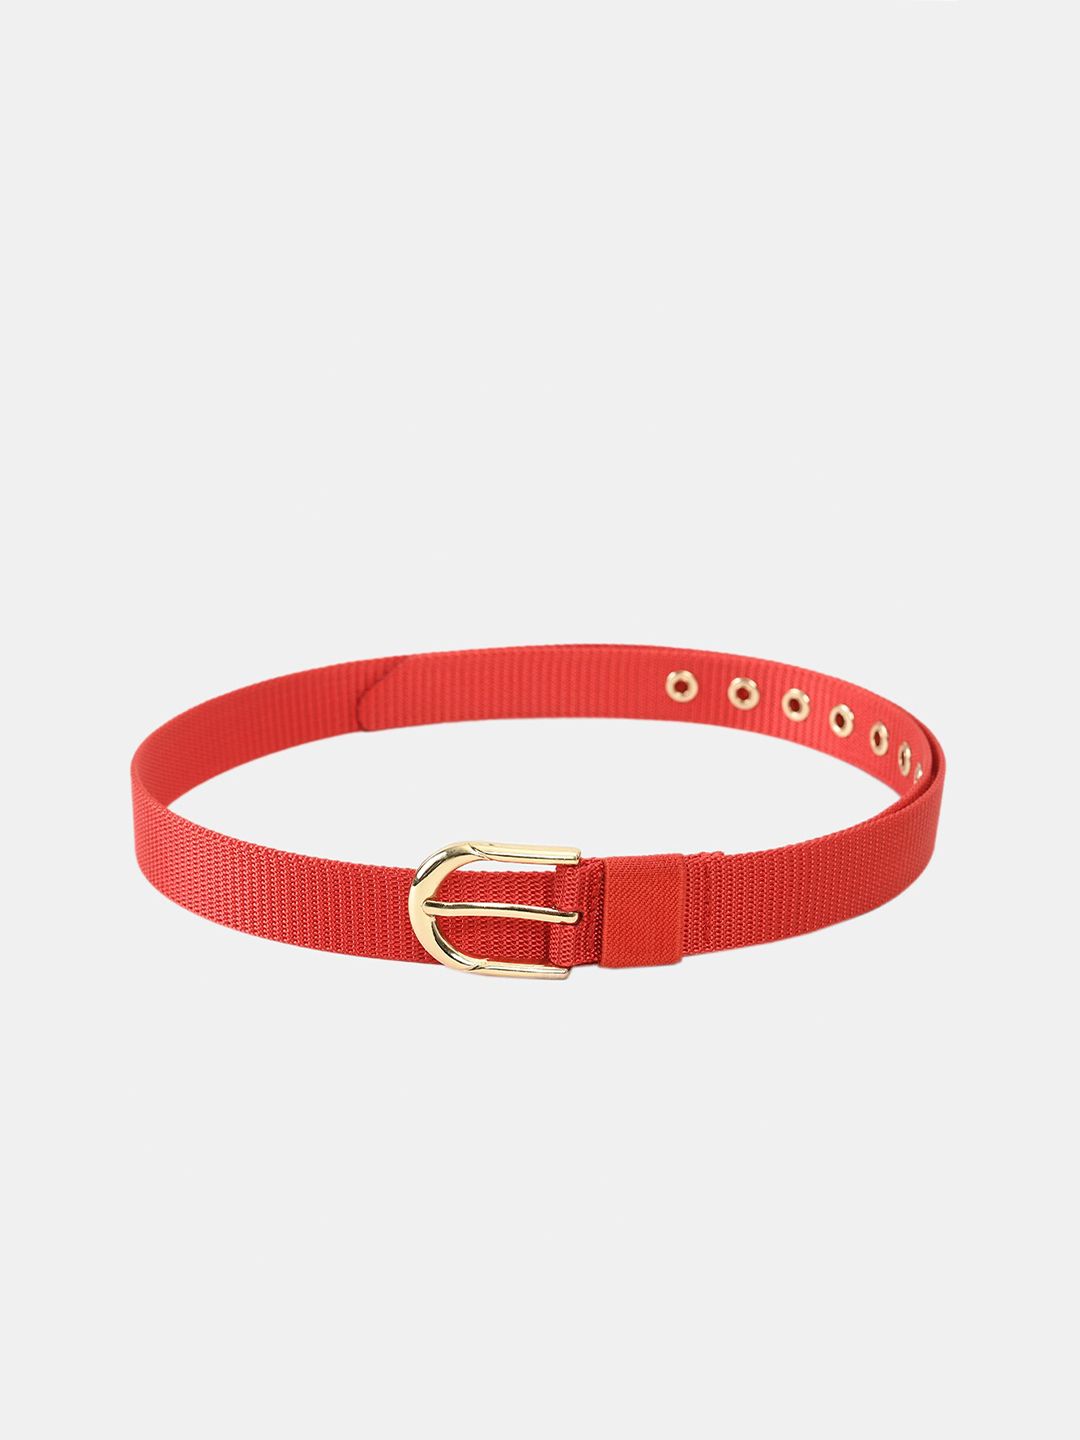 Kastner Women Solid Red Canvas Belt Price in India